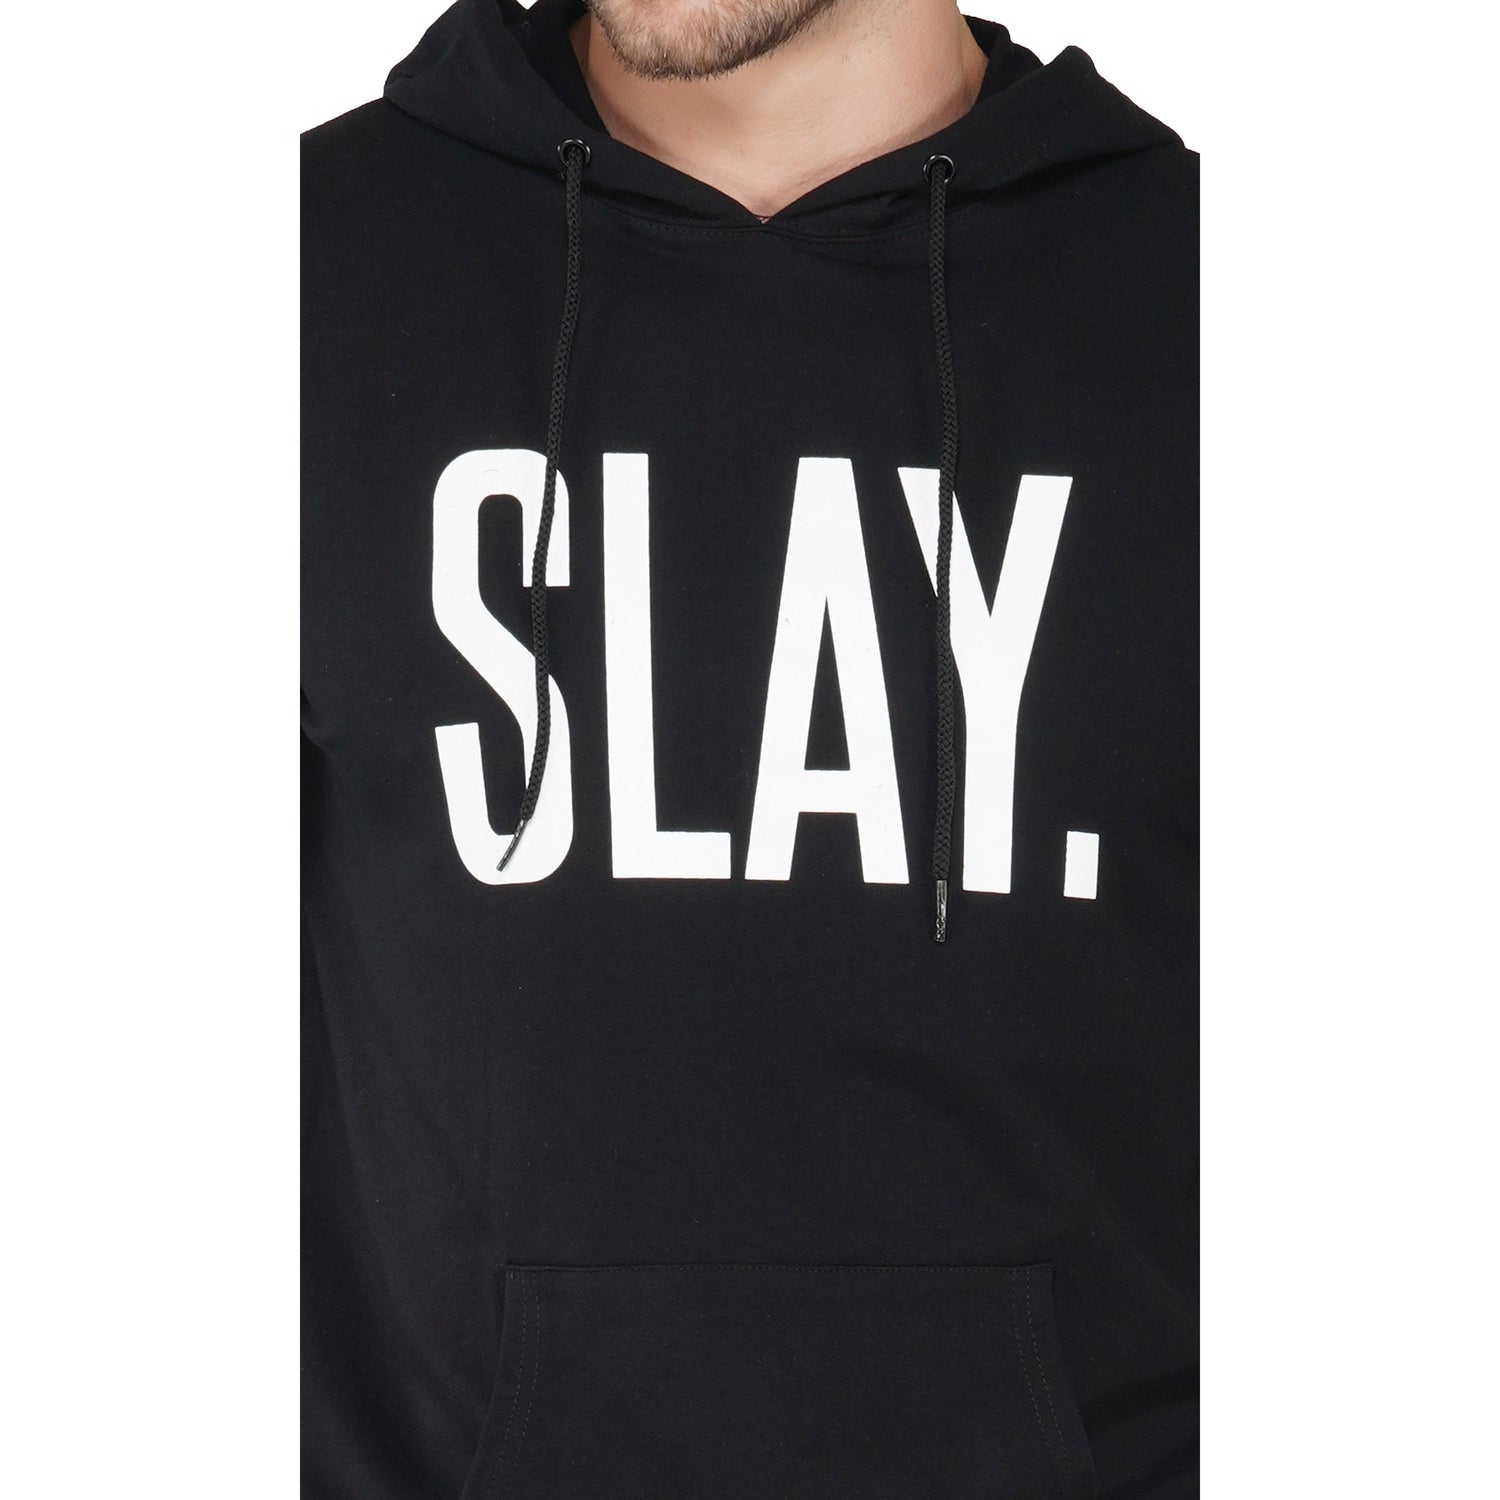 SLAY. Classic Men's Black Printed Tracksuit-clothing-to-slay.myshopify.com-Tracksuit